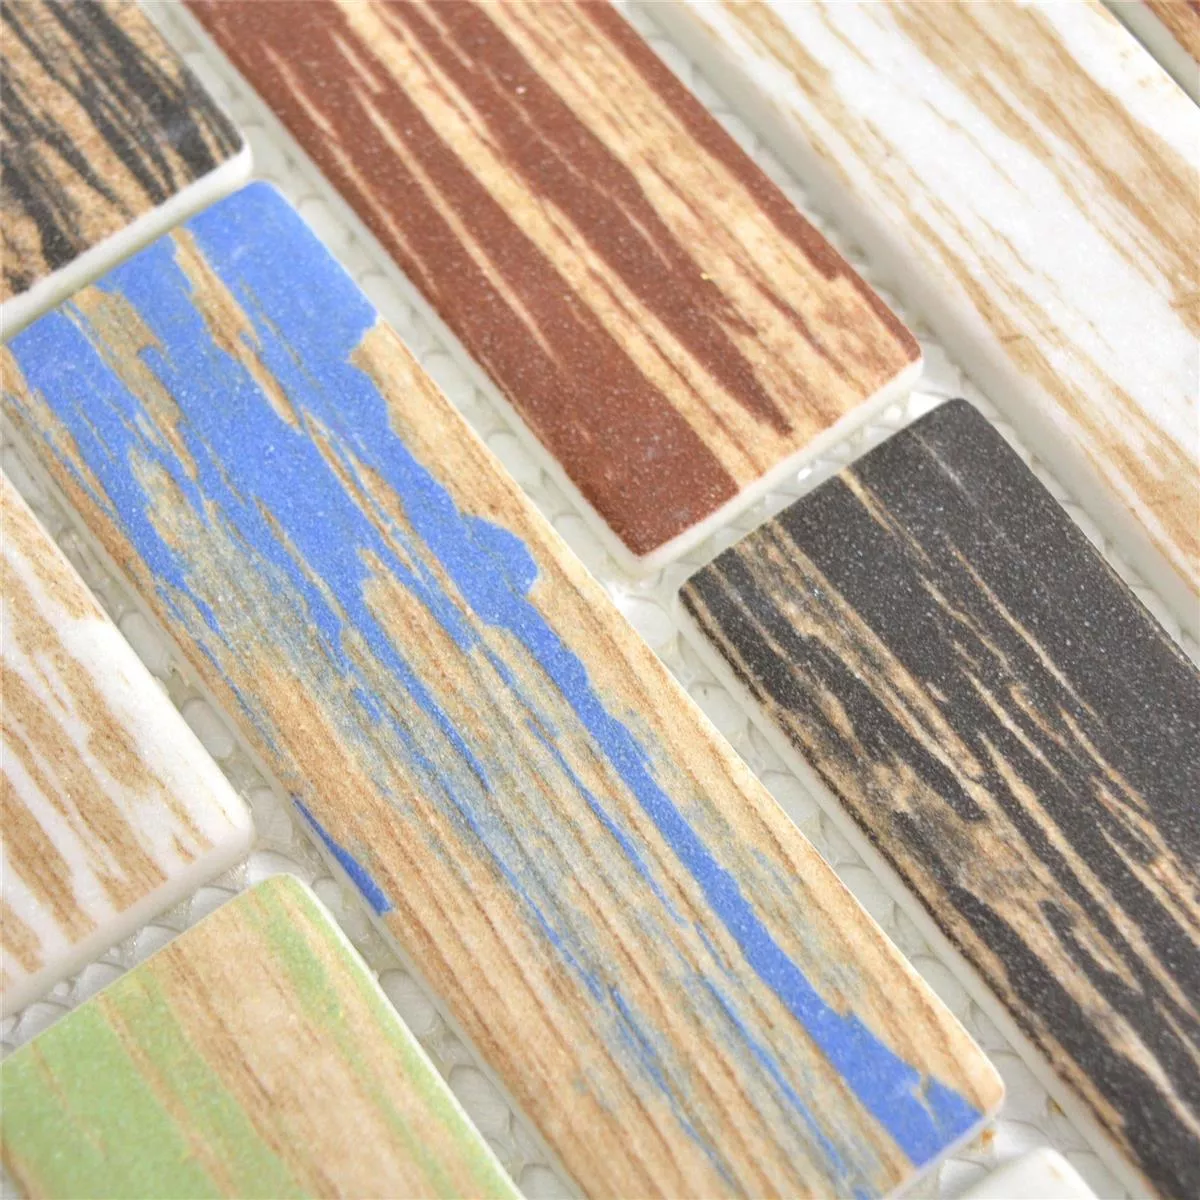 Sample Glass Mosaic Tiles Lunatic Wood Optic Colored